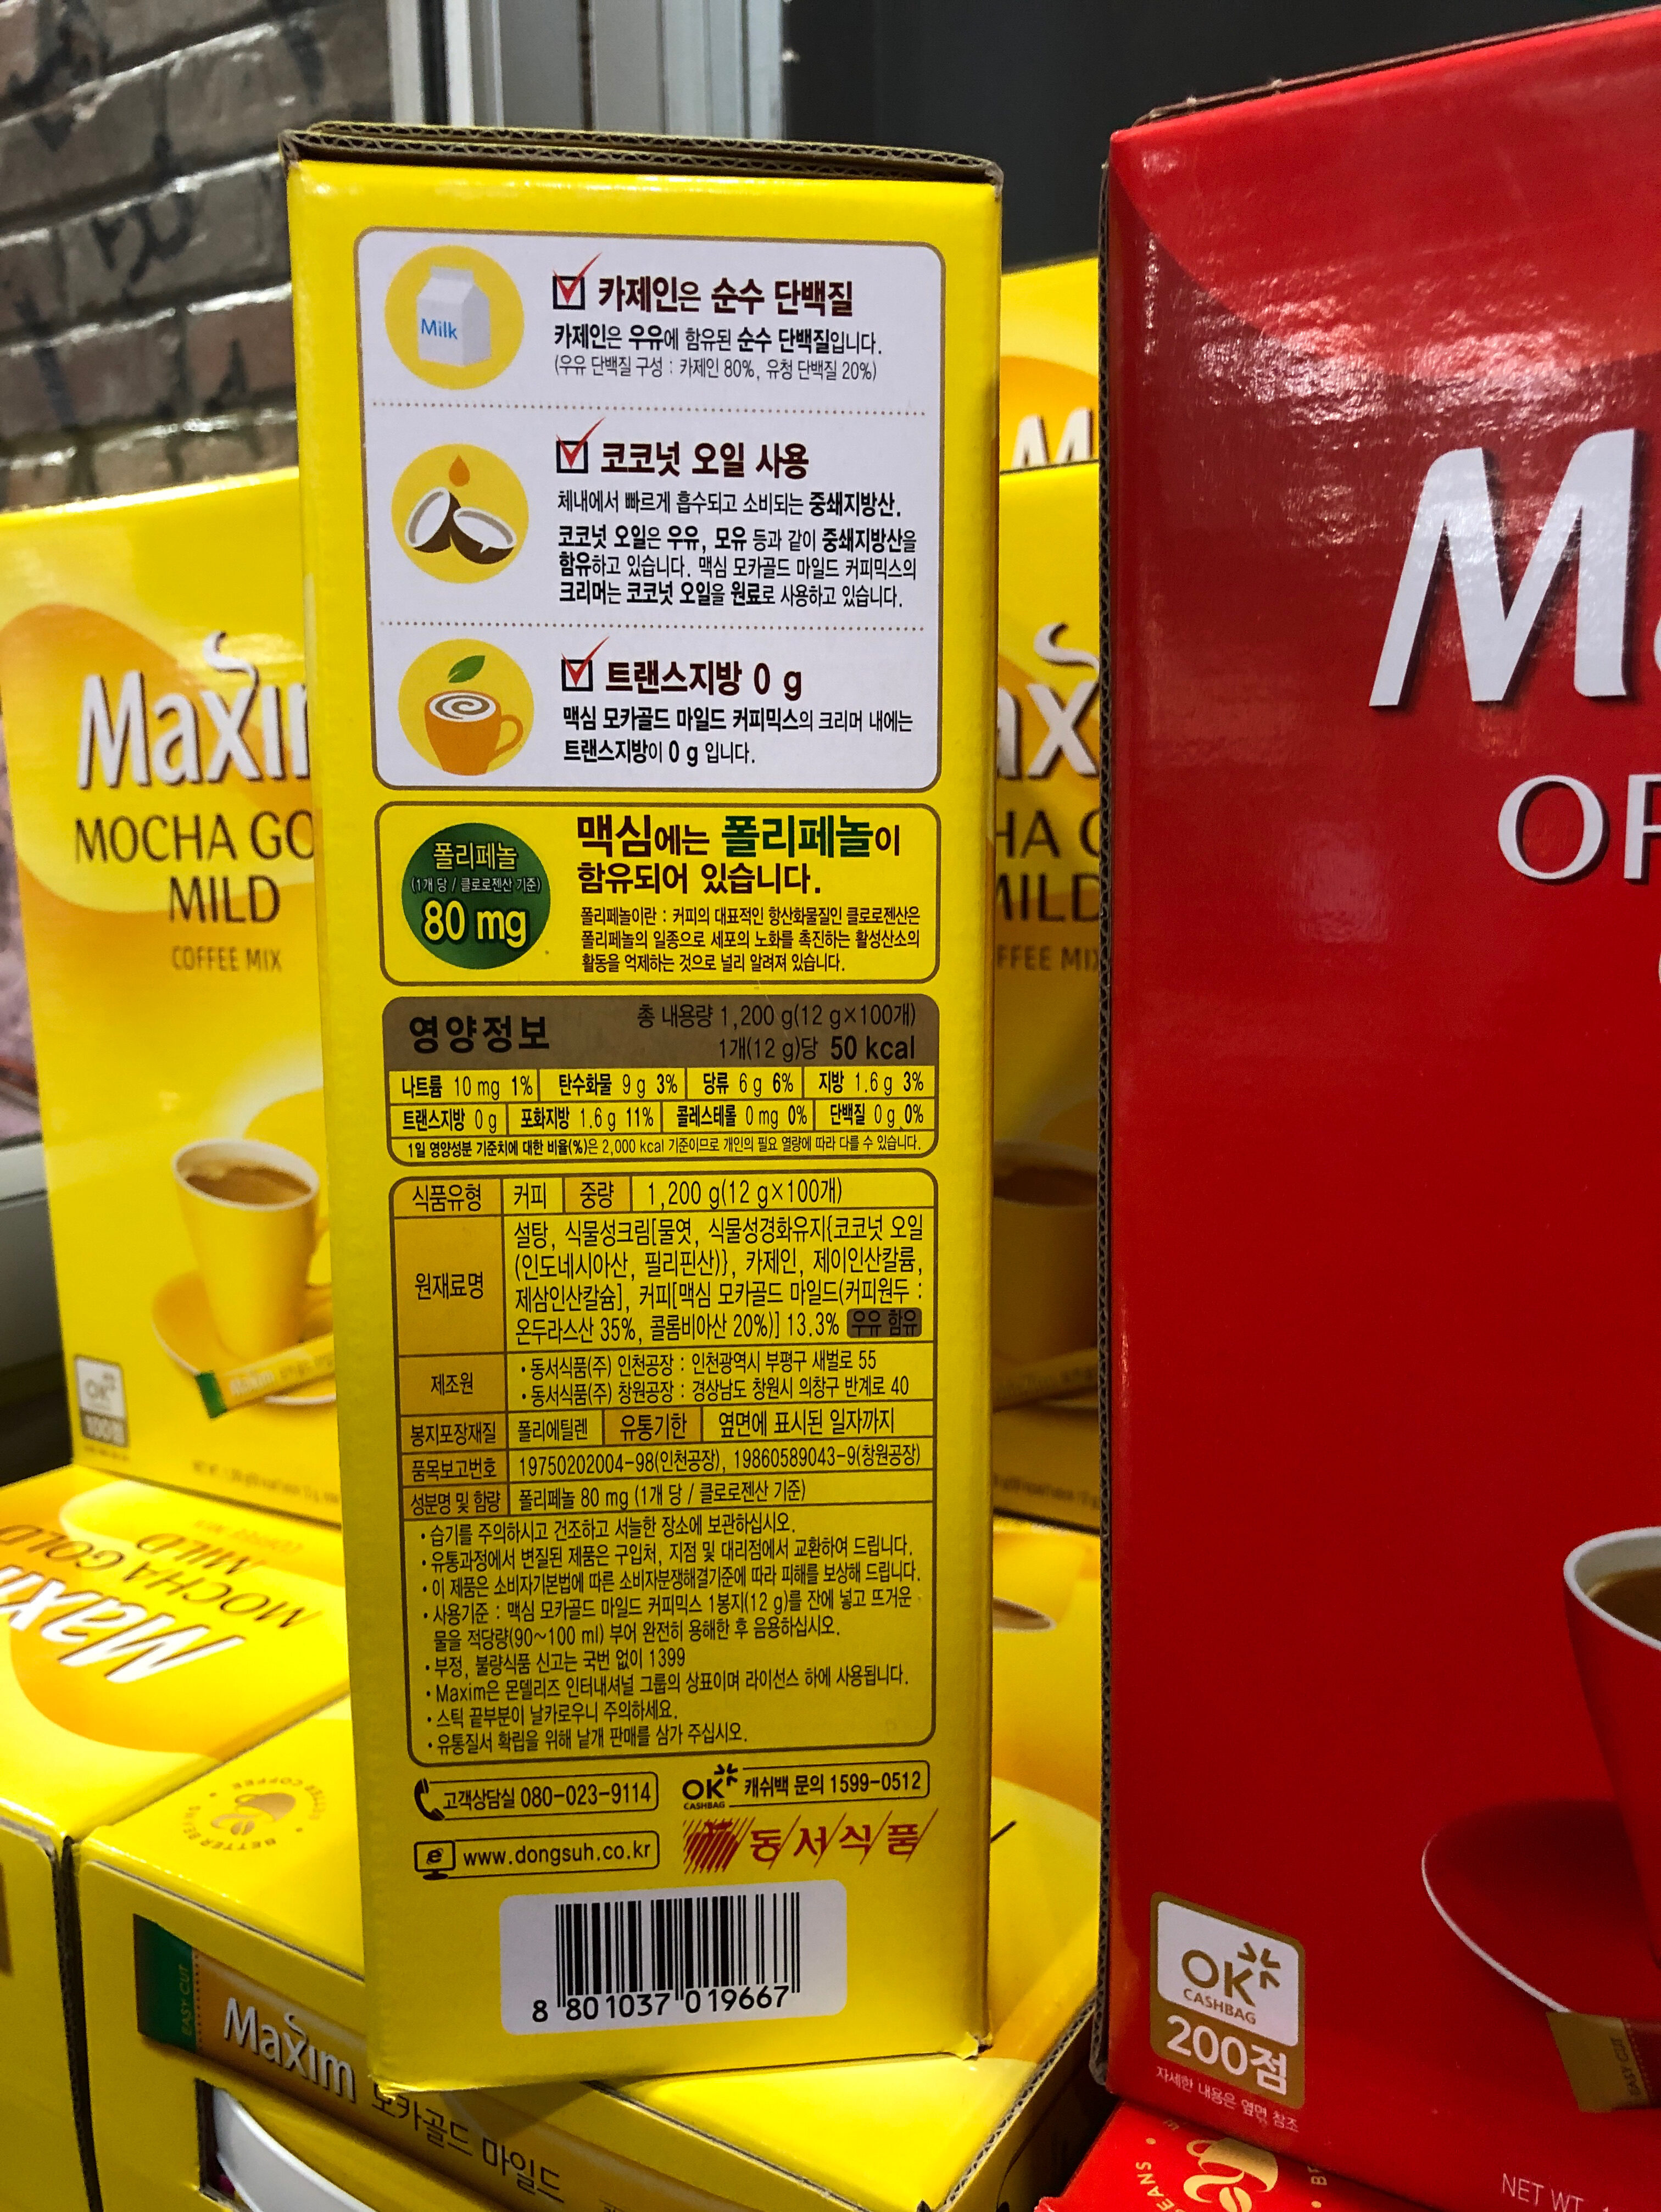 Mocha gold mild - Ingredients